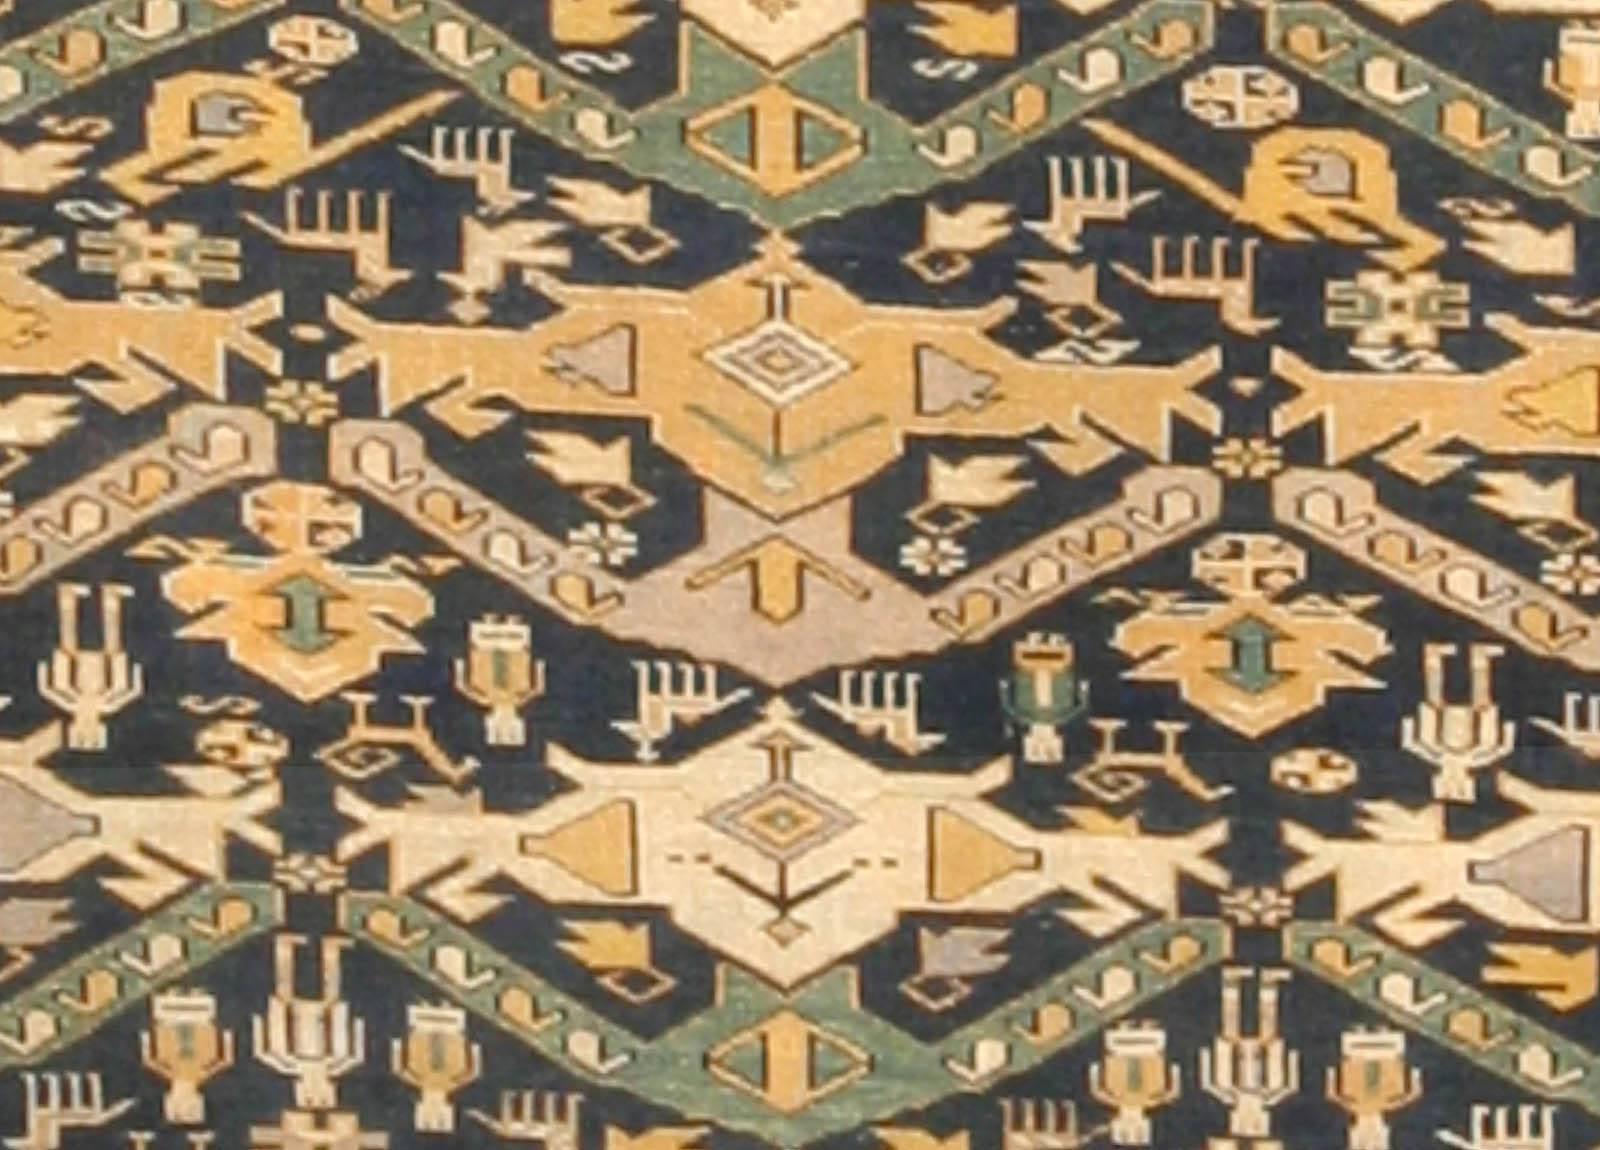 19th century Shirvan handmade wool rug
Size: 4'0